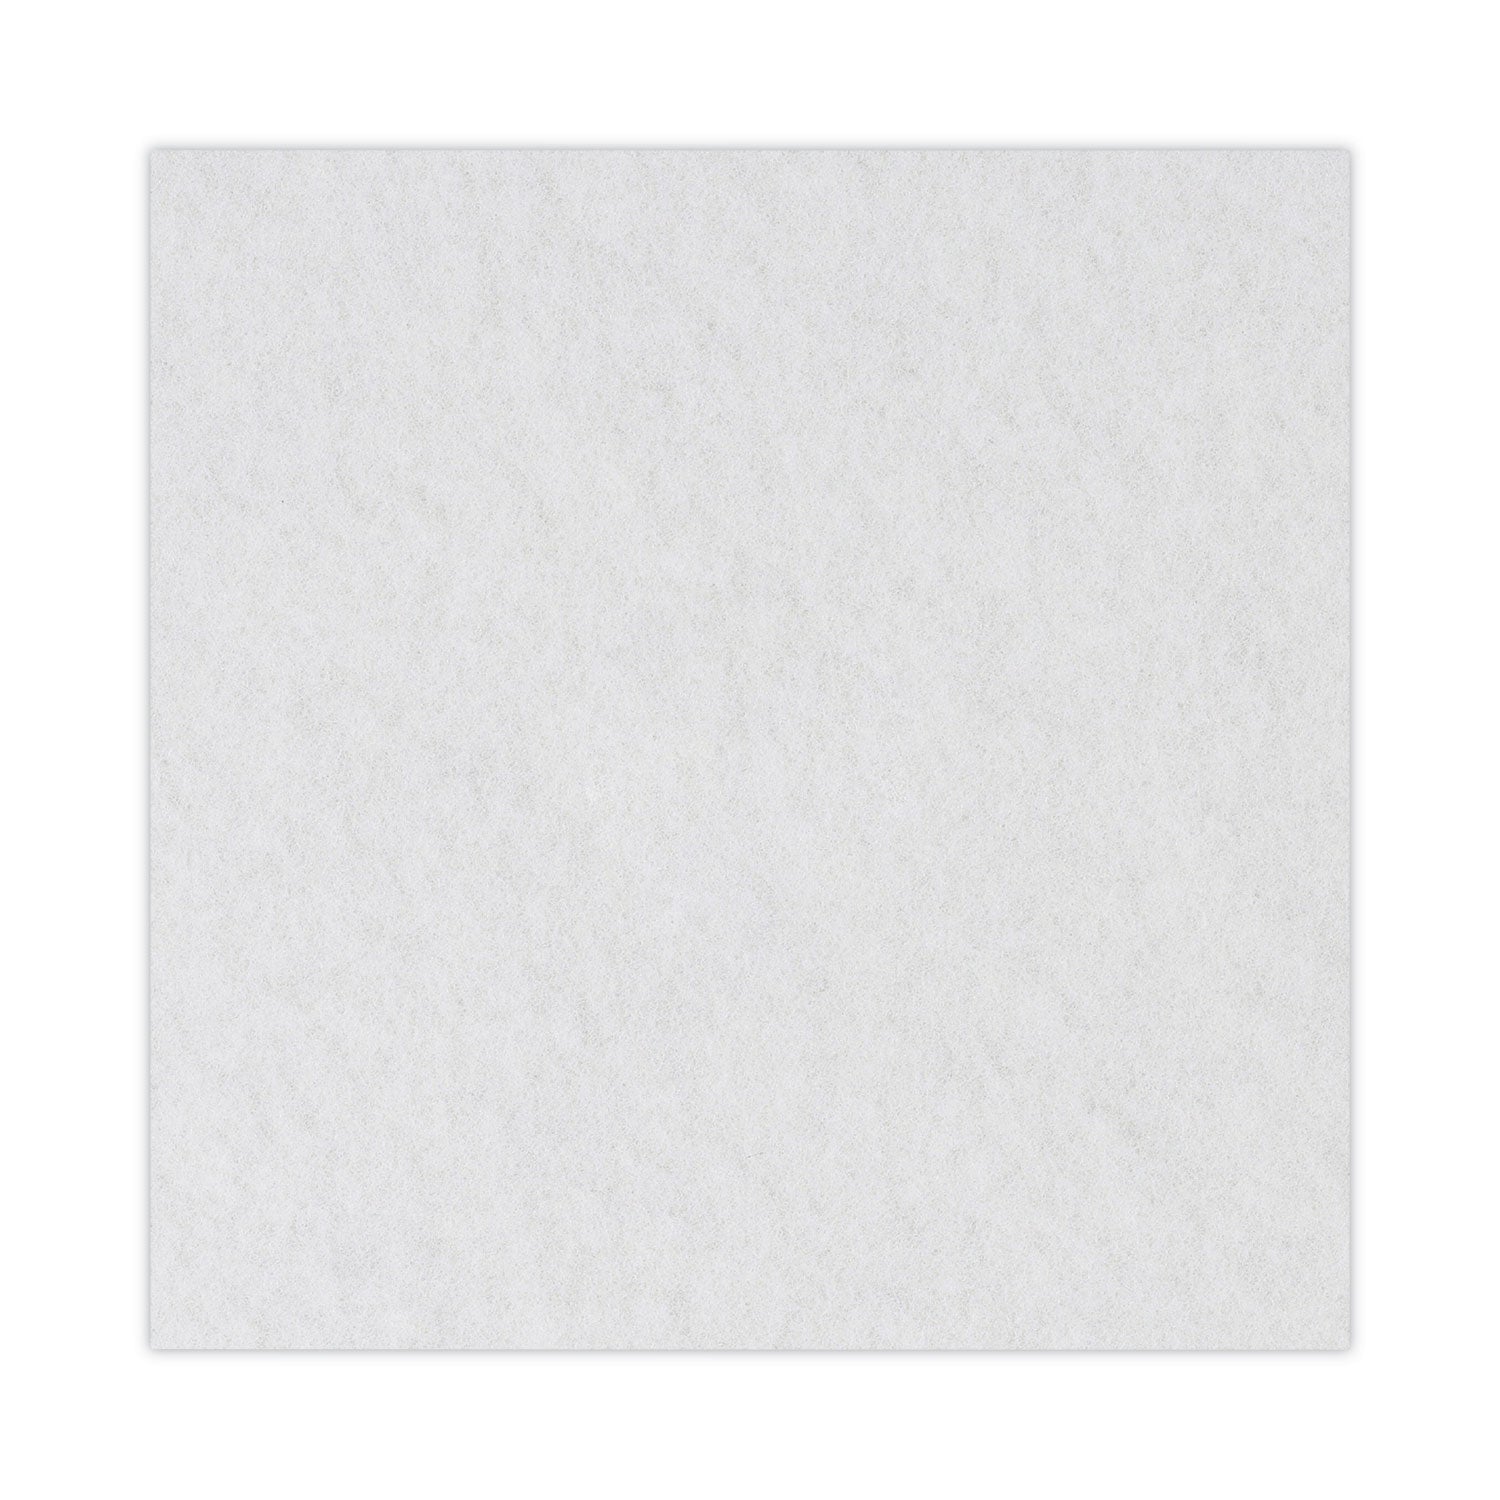 Polishing Floor Pads, 17" Diameter, White, 5/Carton - 